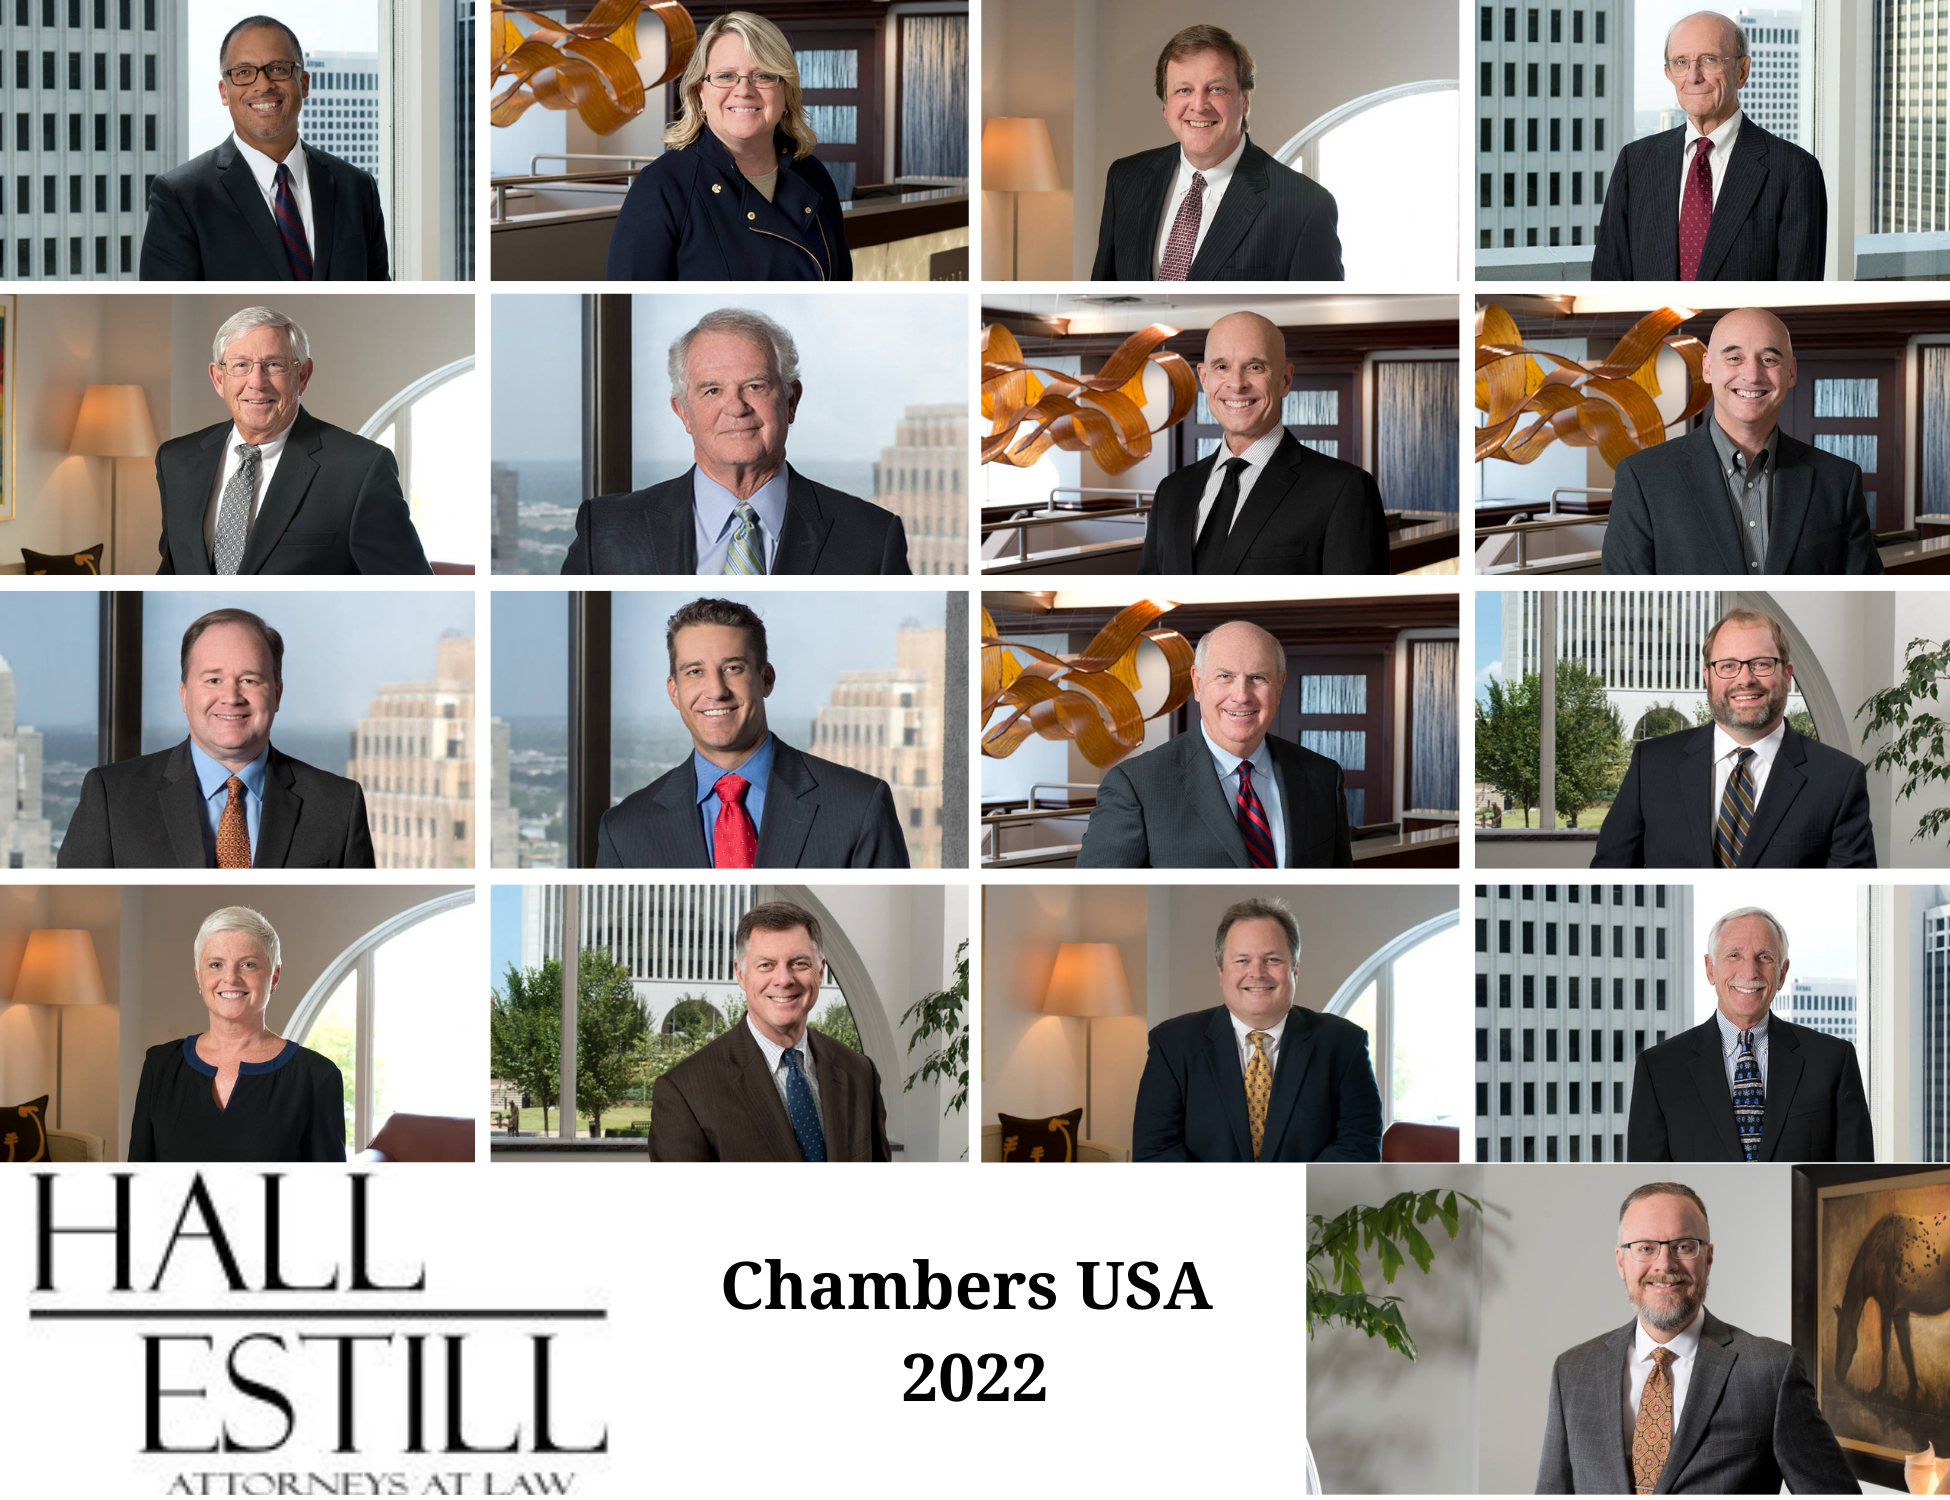 Hall Estill Attorneys at Law - Chambers USA 2022